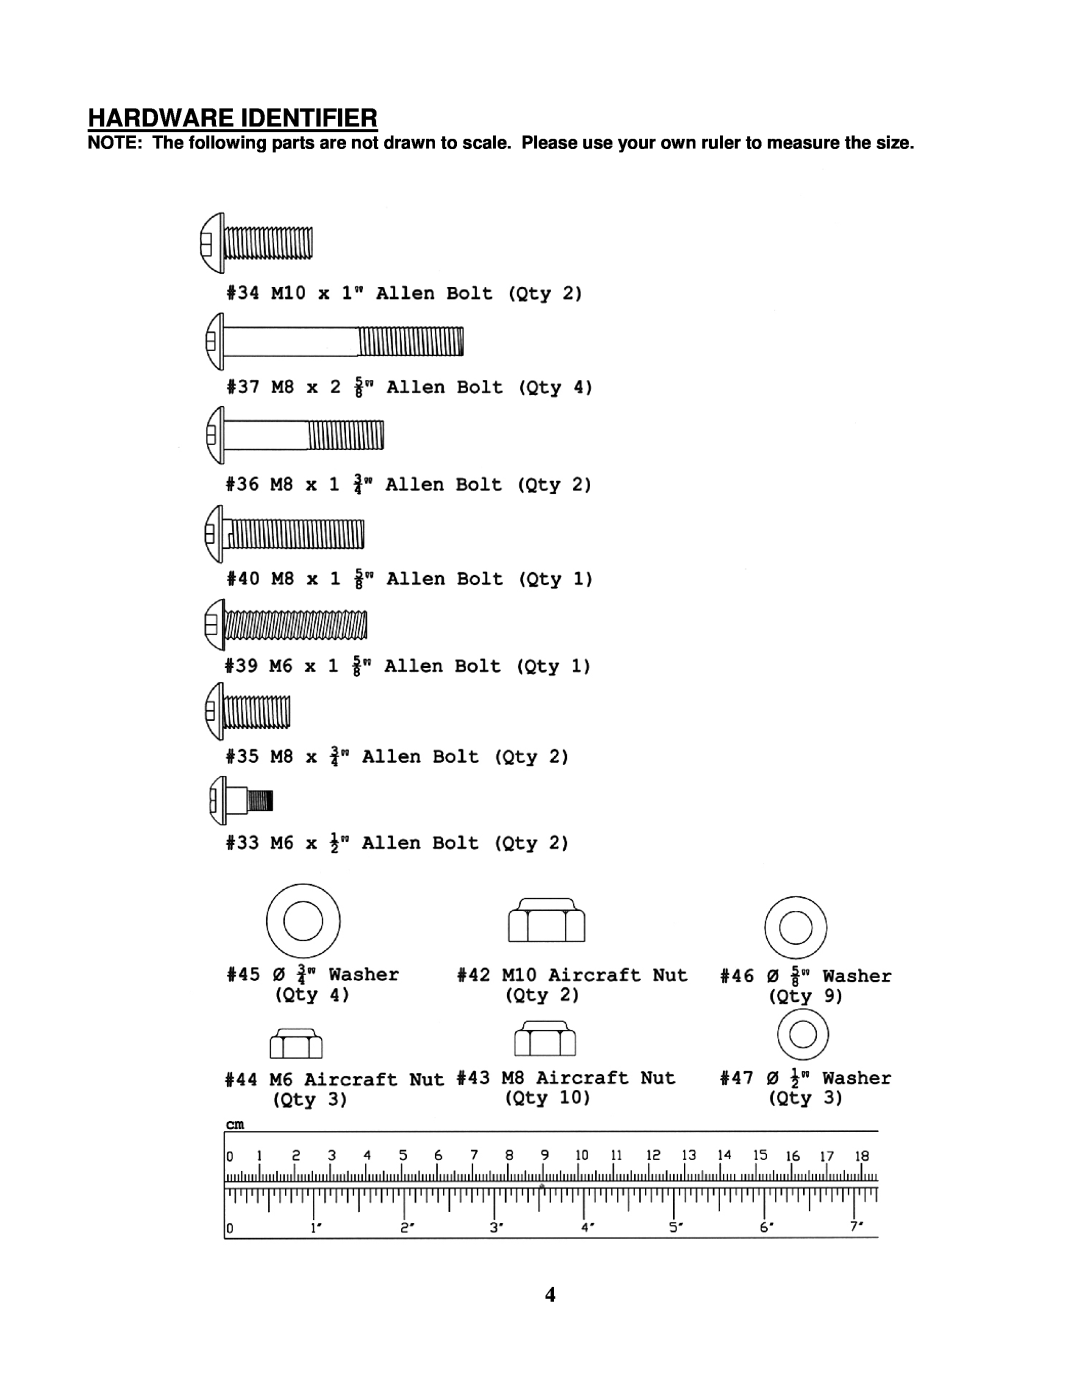 Impex IVT-451 manual Hardware Identifier 